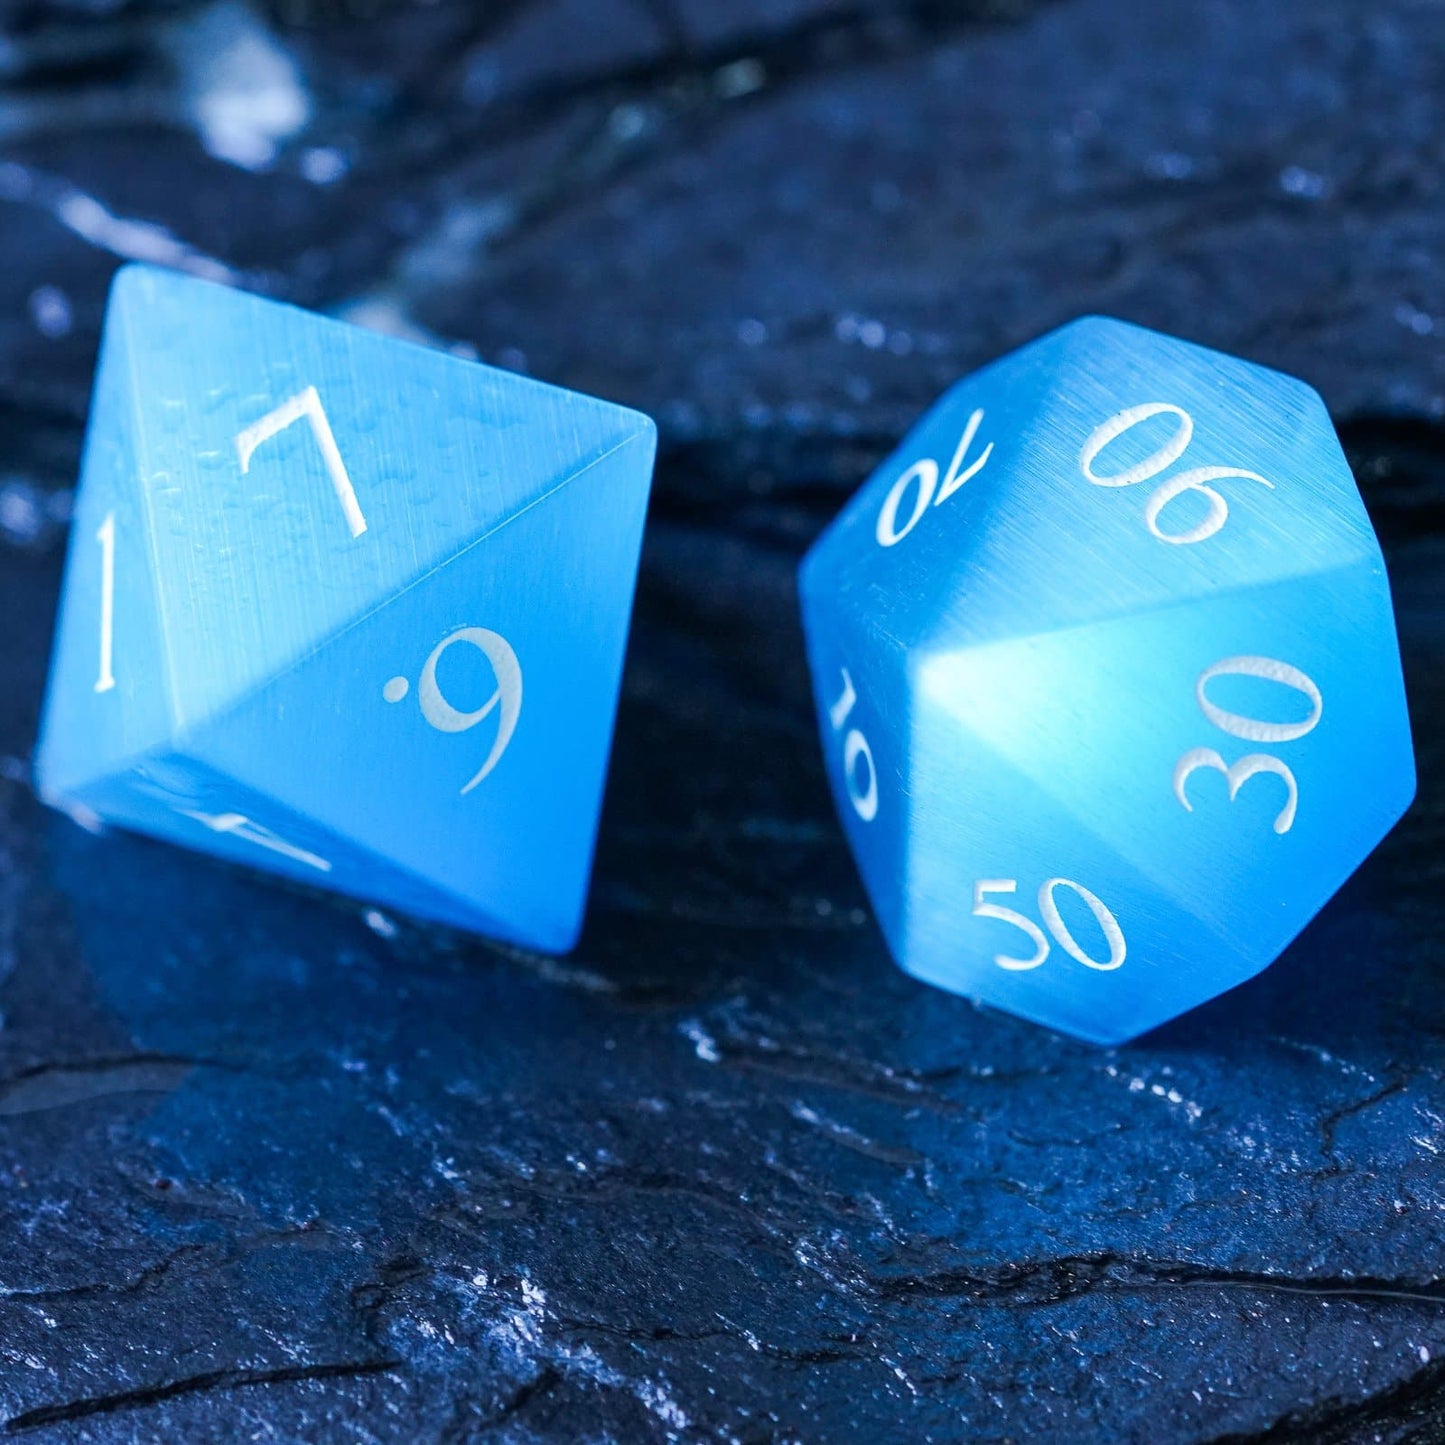 Aqua Blue Cat's Eye Stone Meeple Dungeon Dice Set